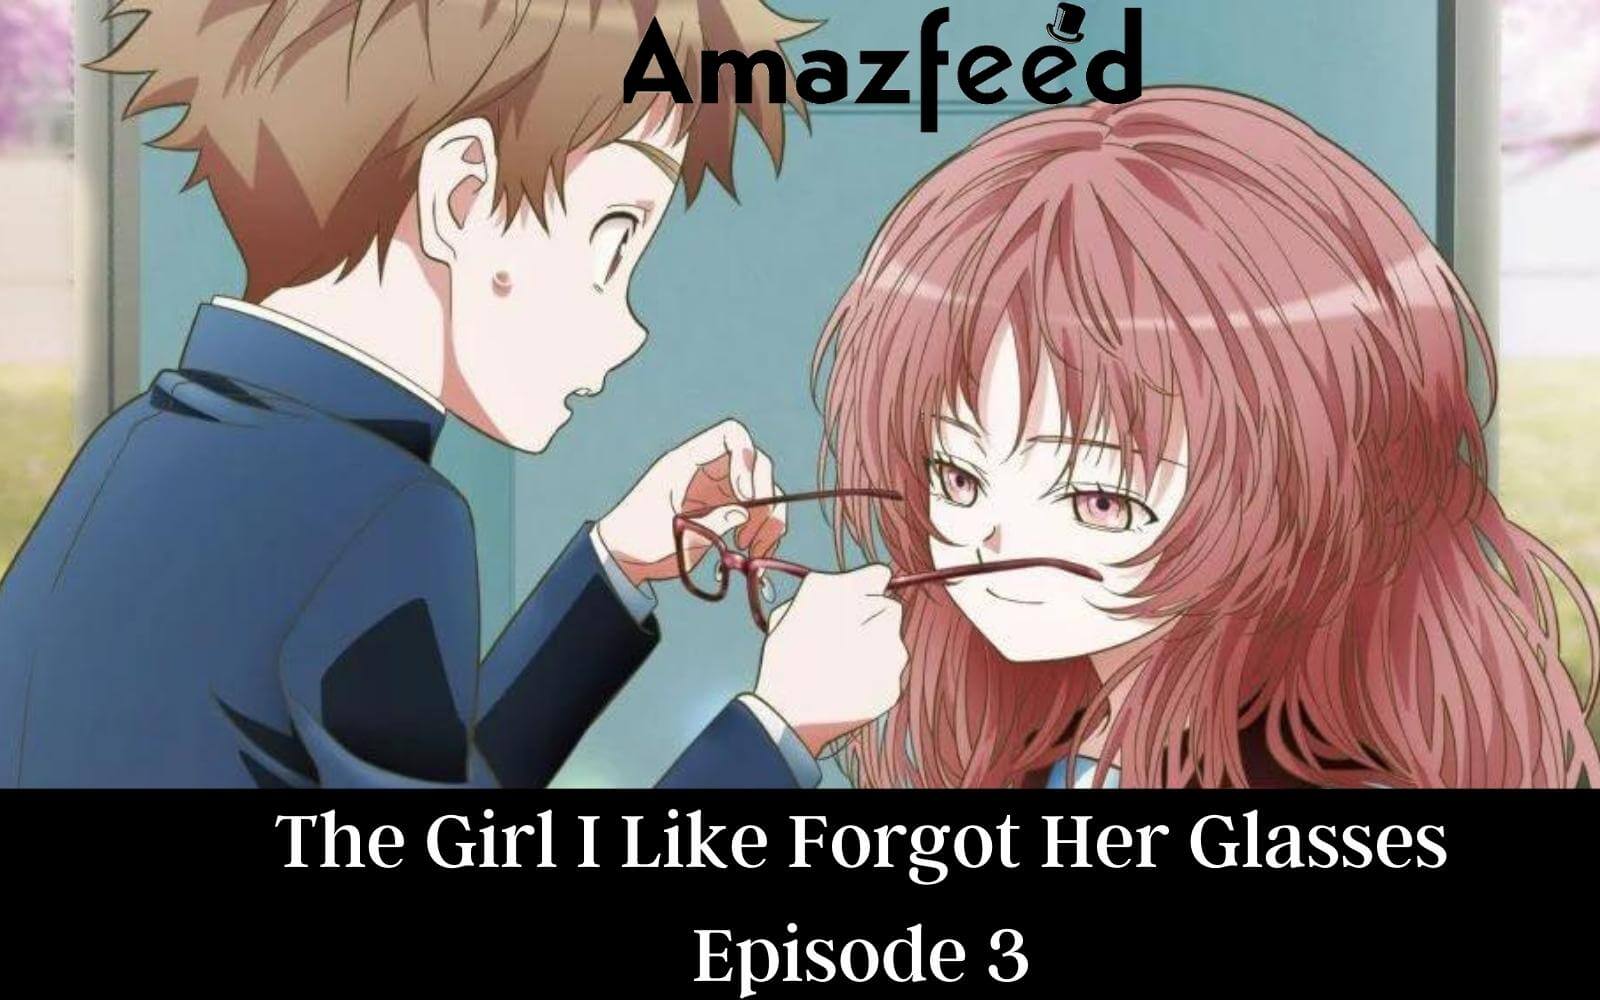 The Girl I Like Forgot Her Glasses Episode 3 exact release time